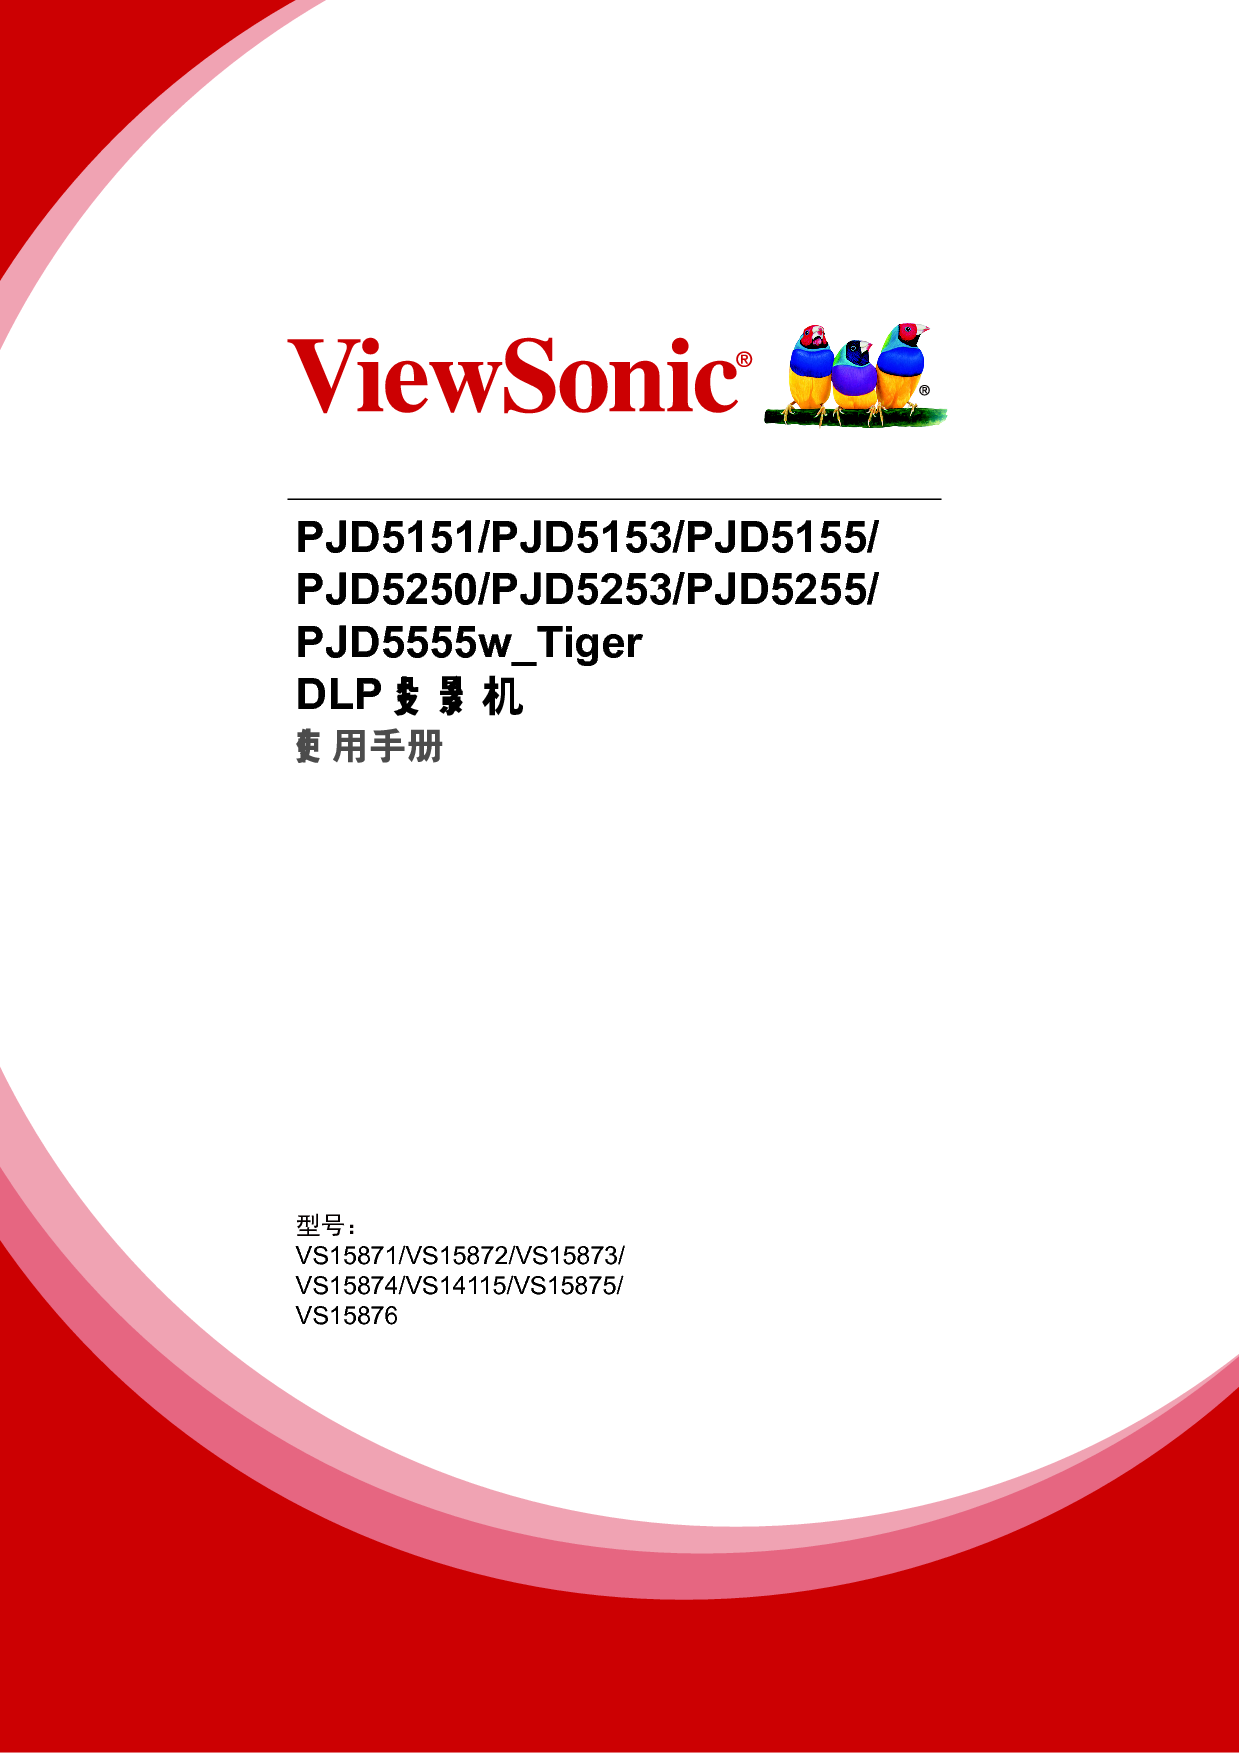 优派 ViewSonic PJD5151, PJD5555w_Tiger 使用说明书 封面